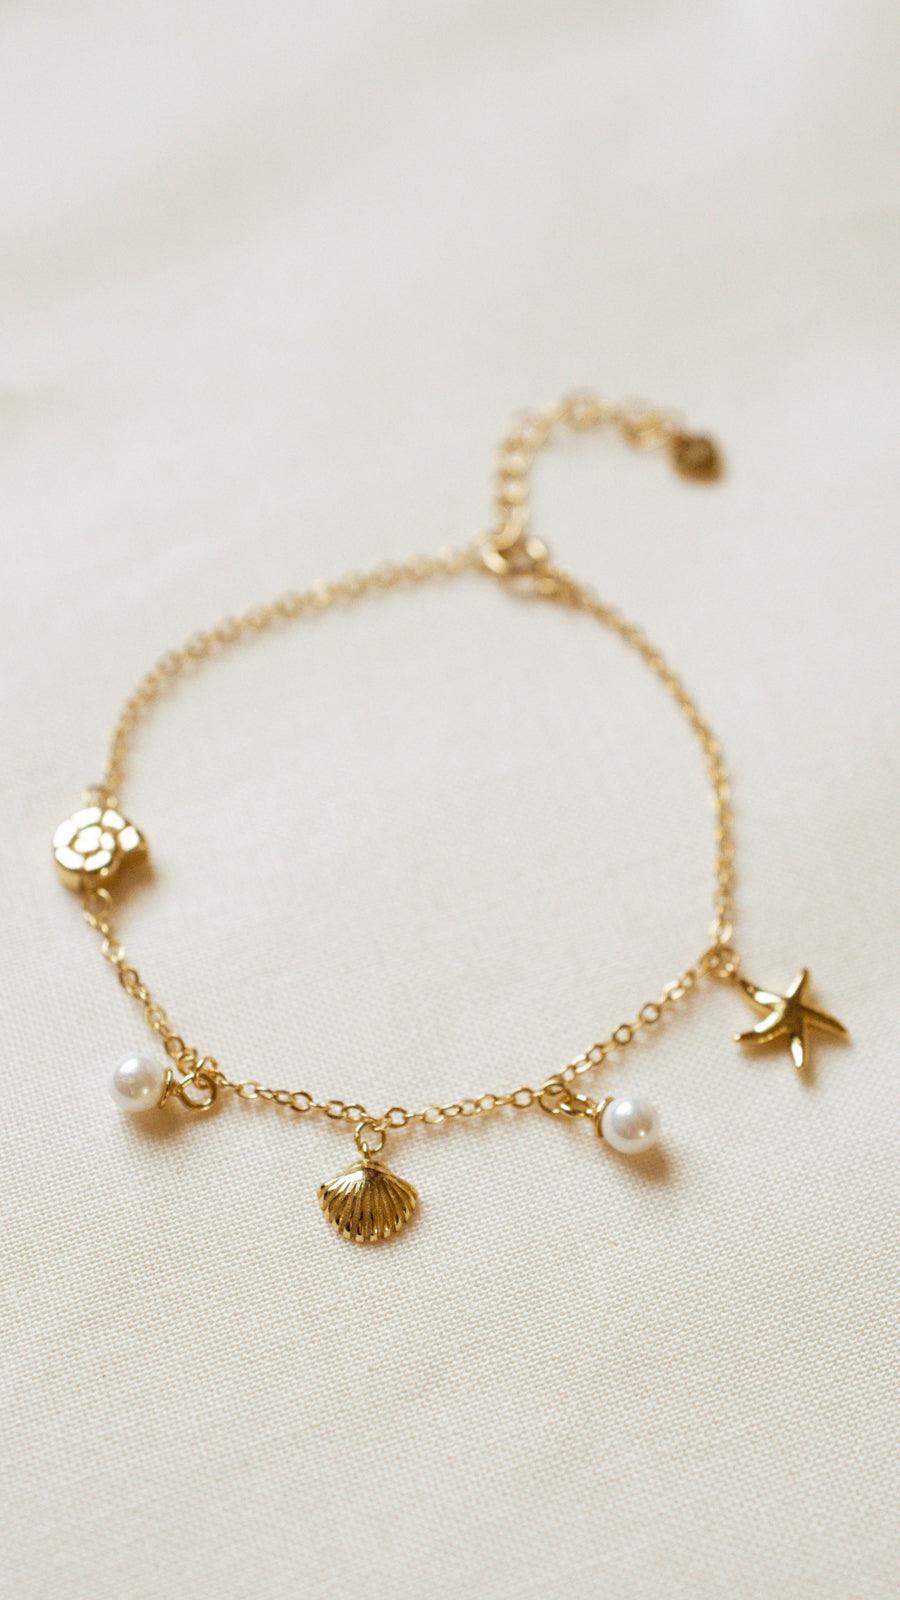 ocean charm bracelet display dainty pearl, starfish and shell charm 